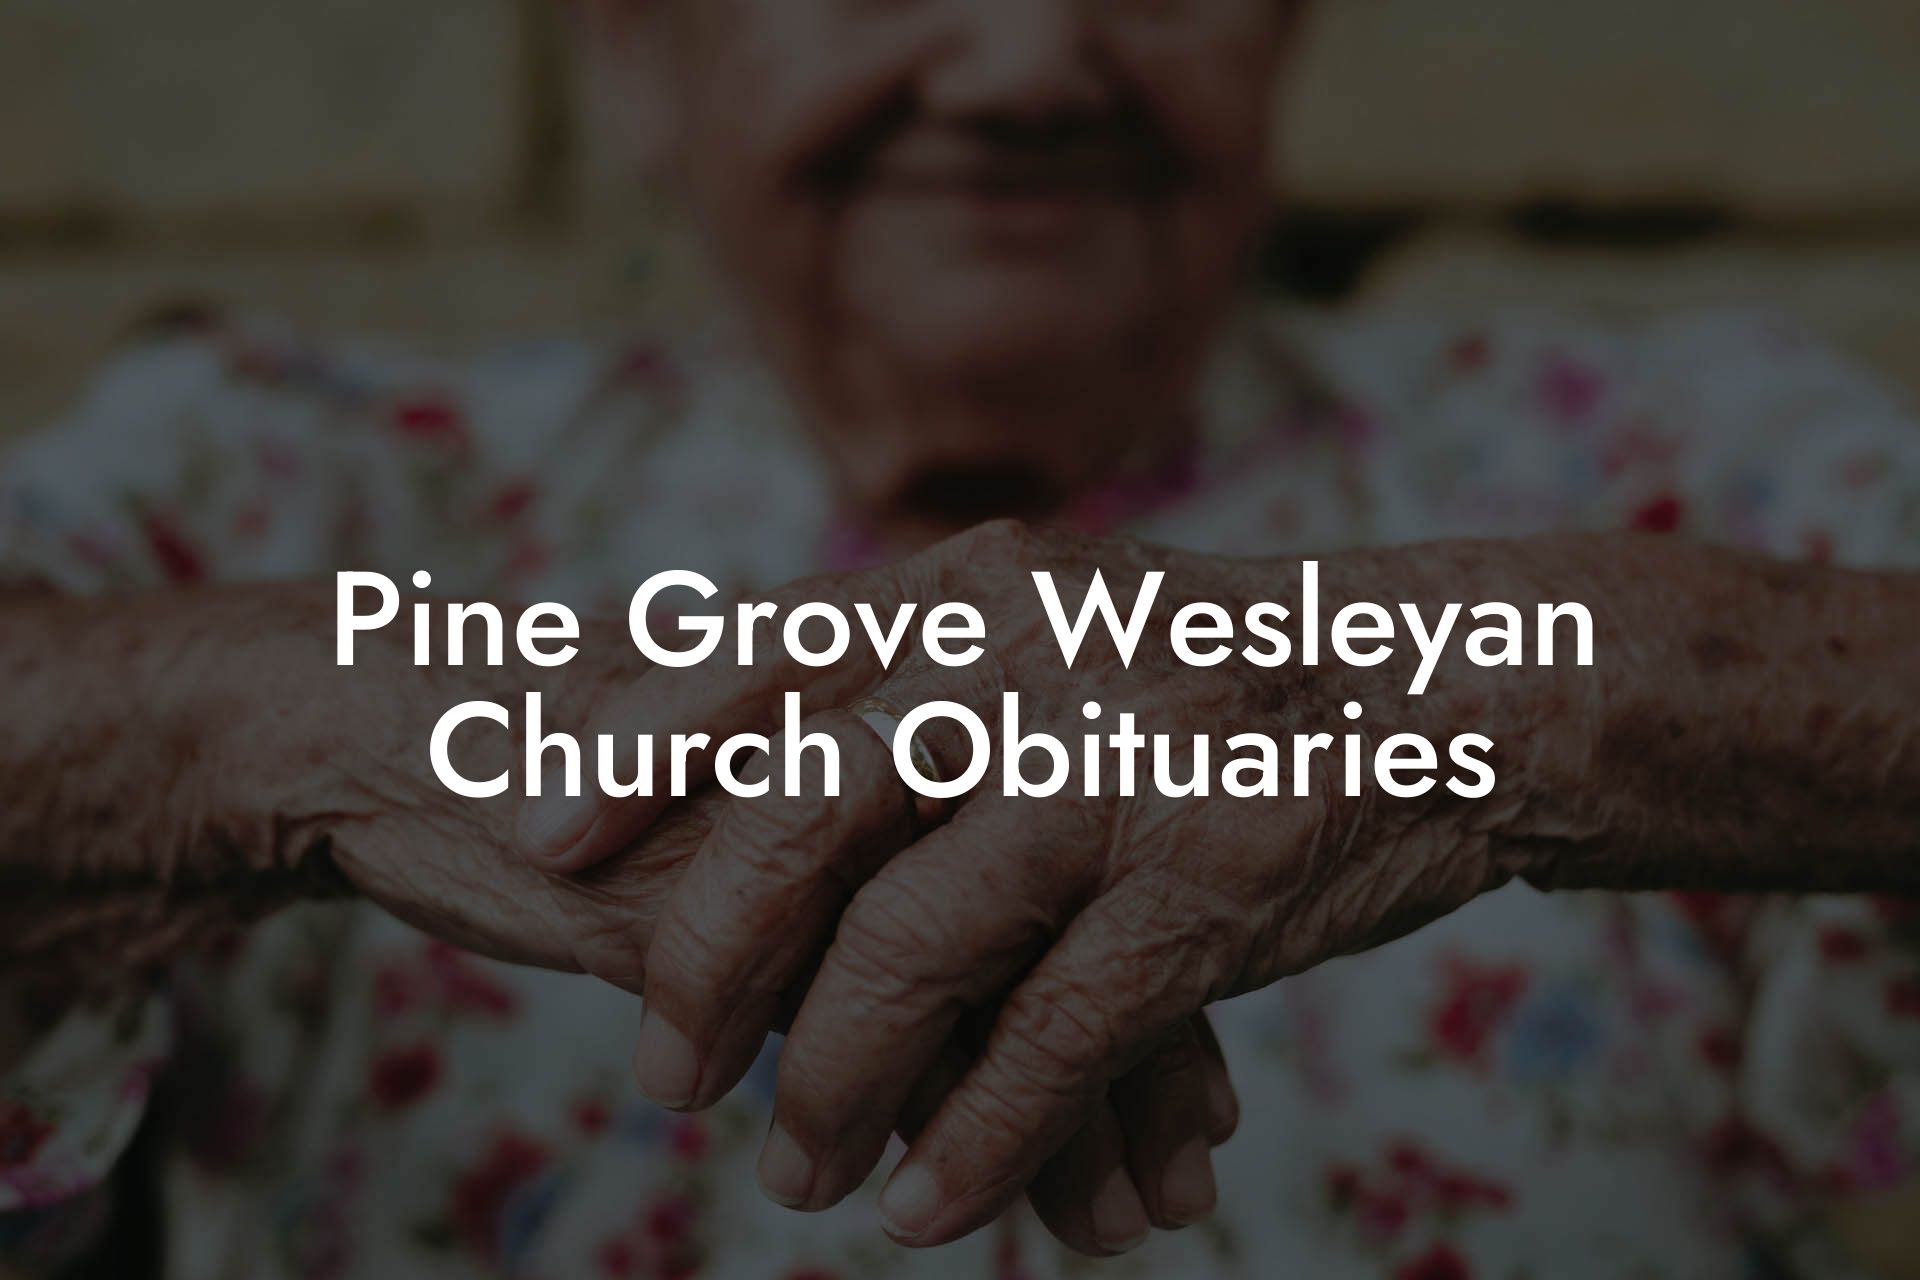 Pine Grove Wesleyan Church Obituaries